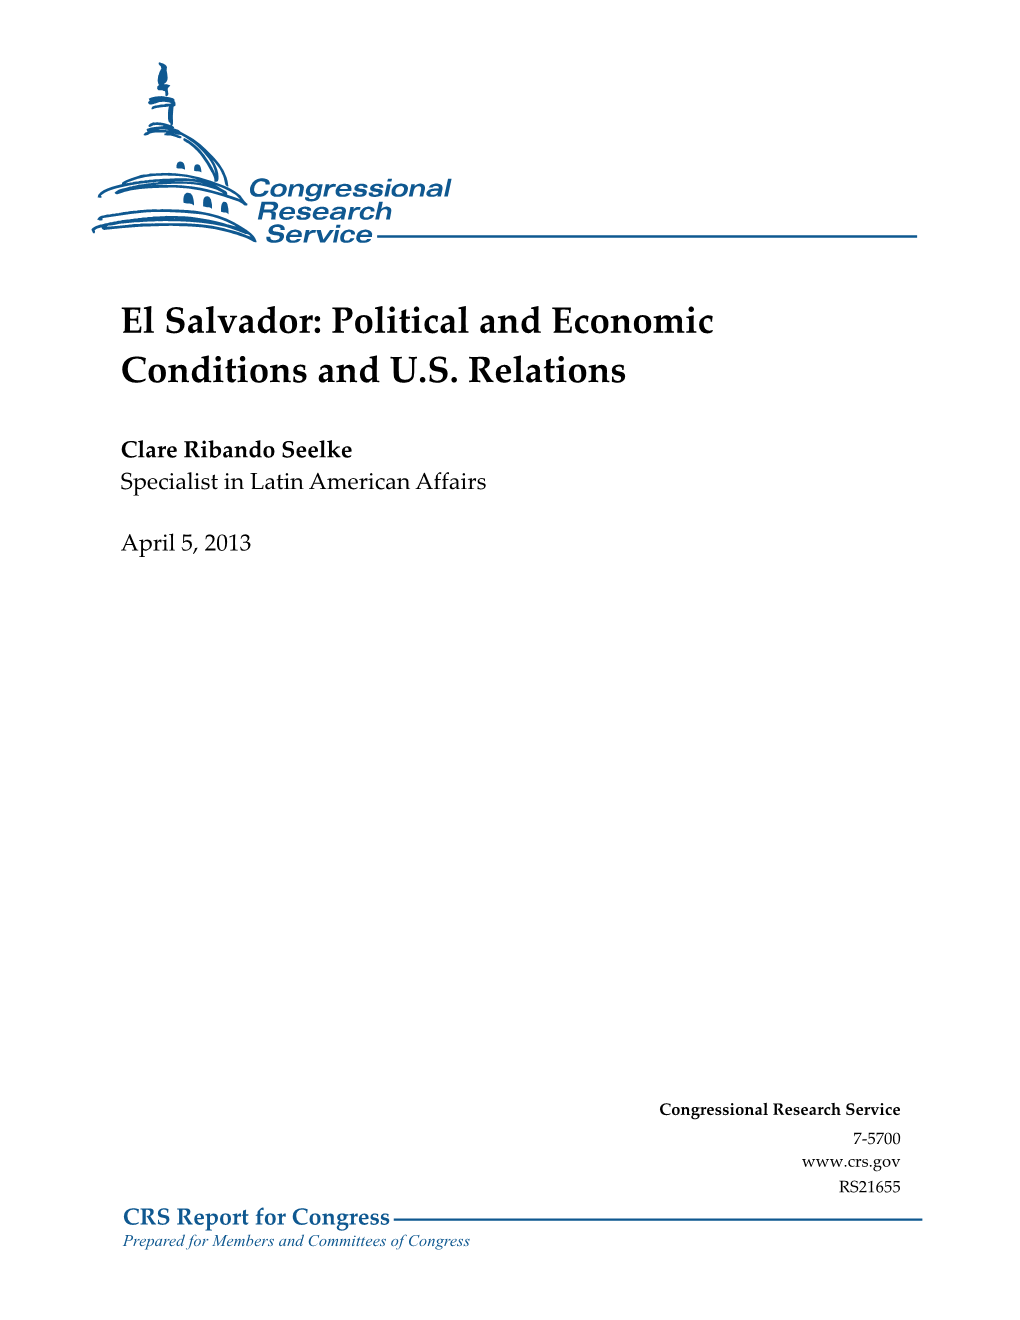 El Salvador: Political and Economic Conditions and U.S. Relations